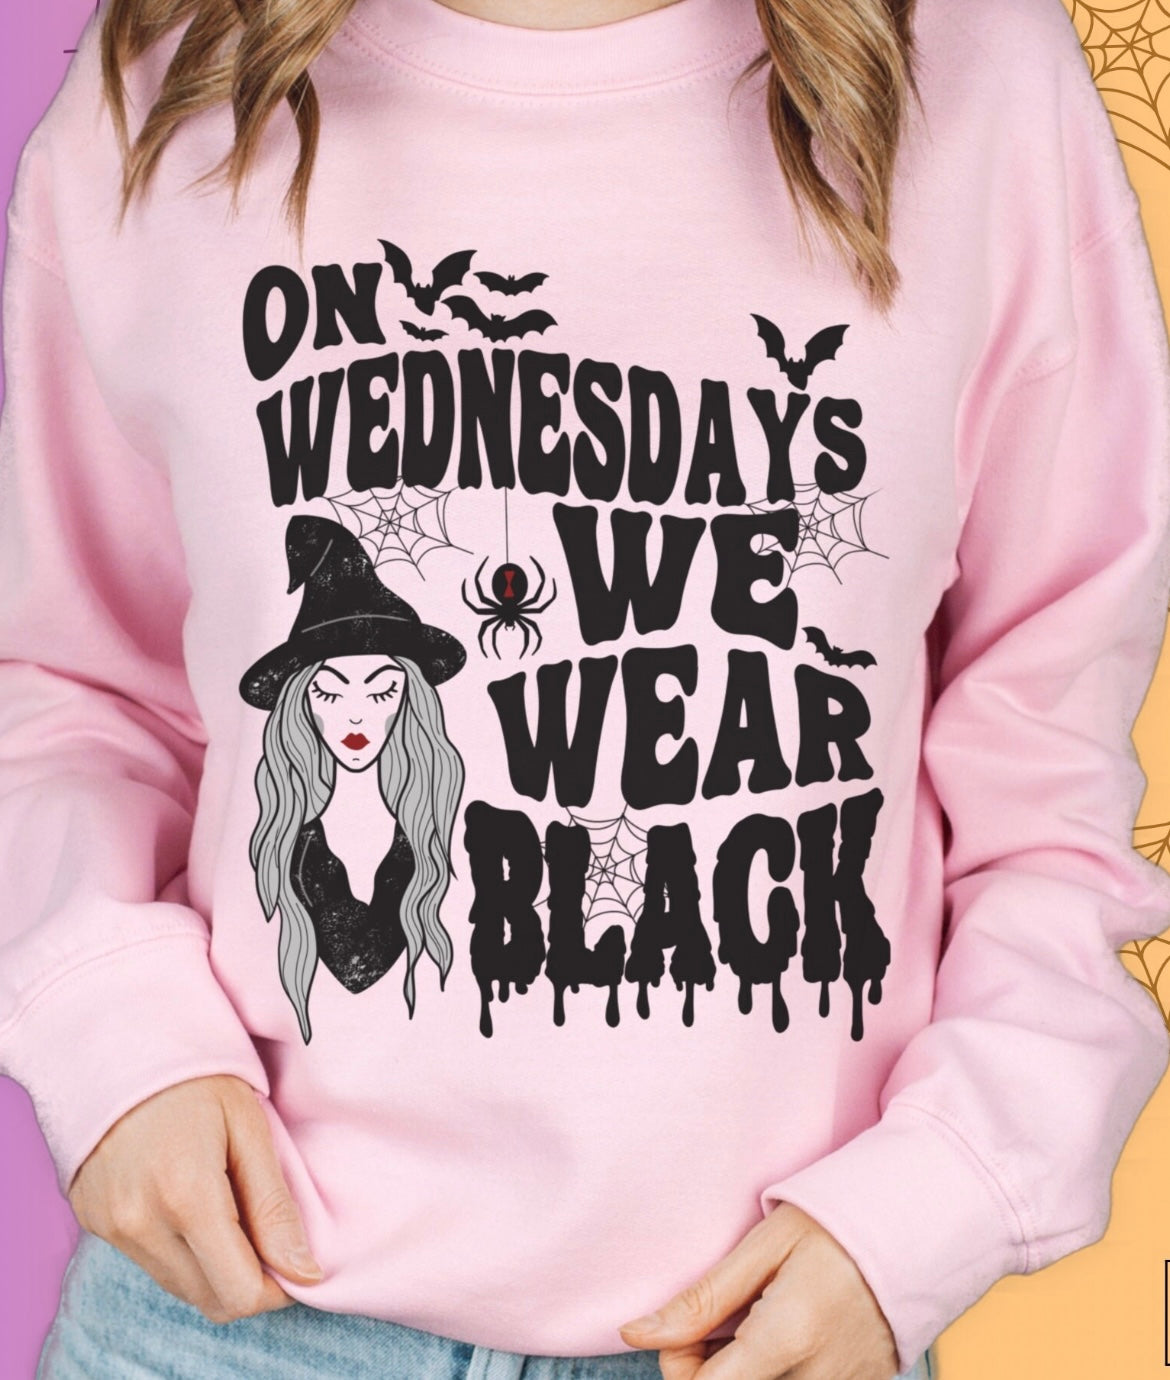 On Wednesdays We Wear Black